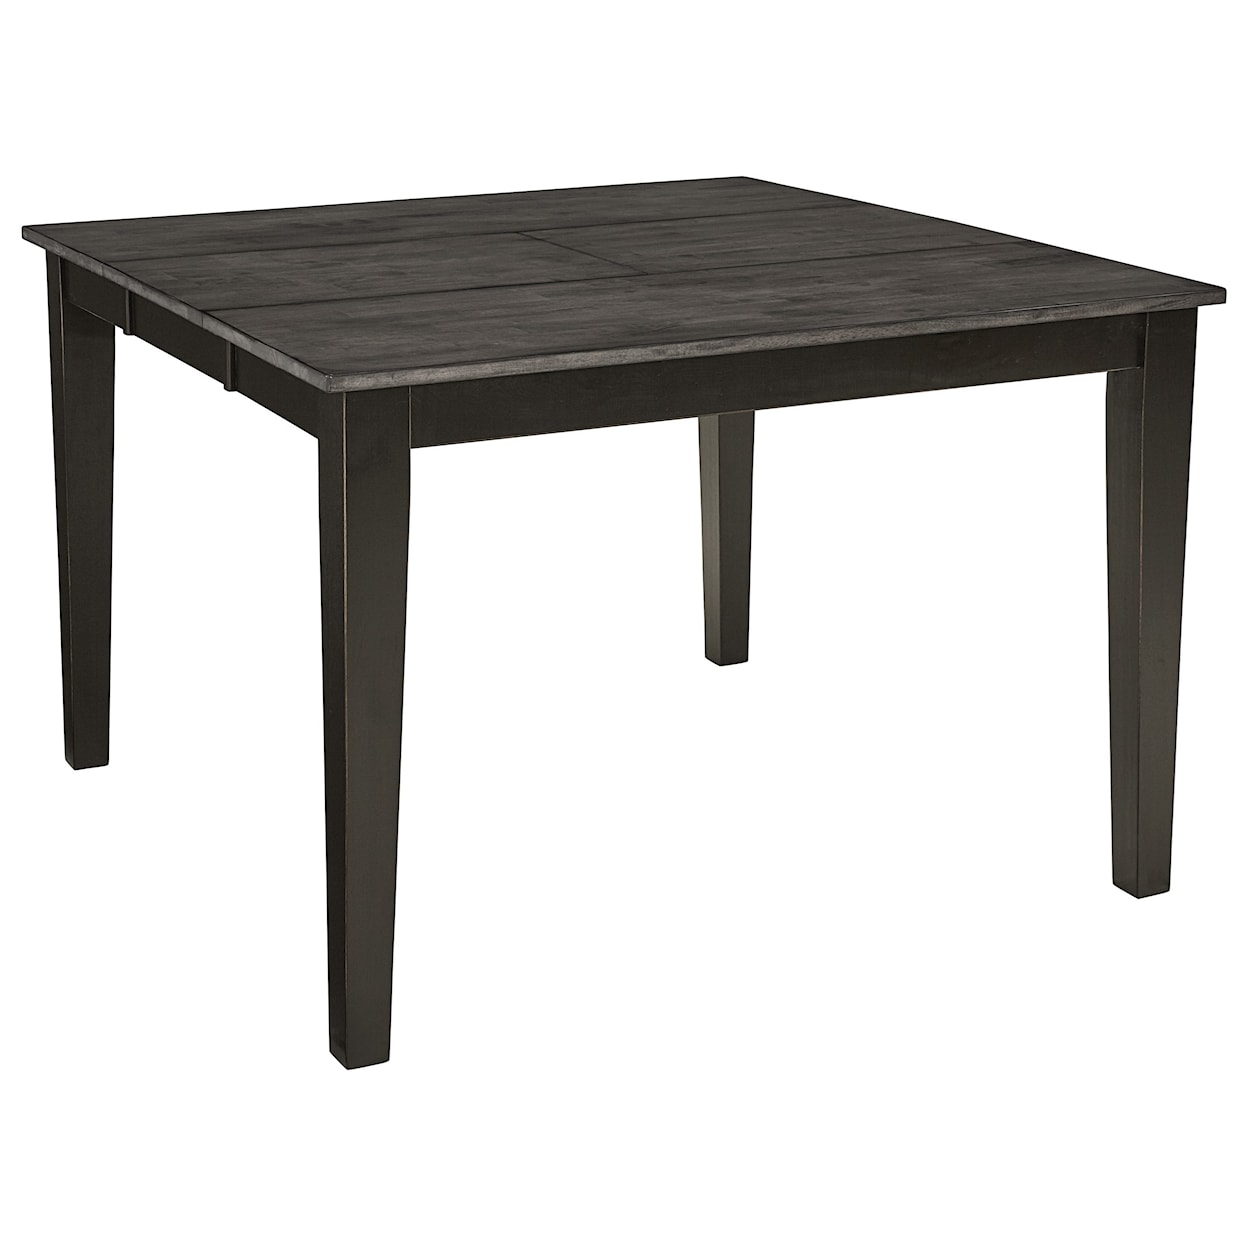 Progressive Furniture Salem Counter Table